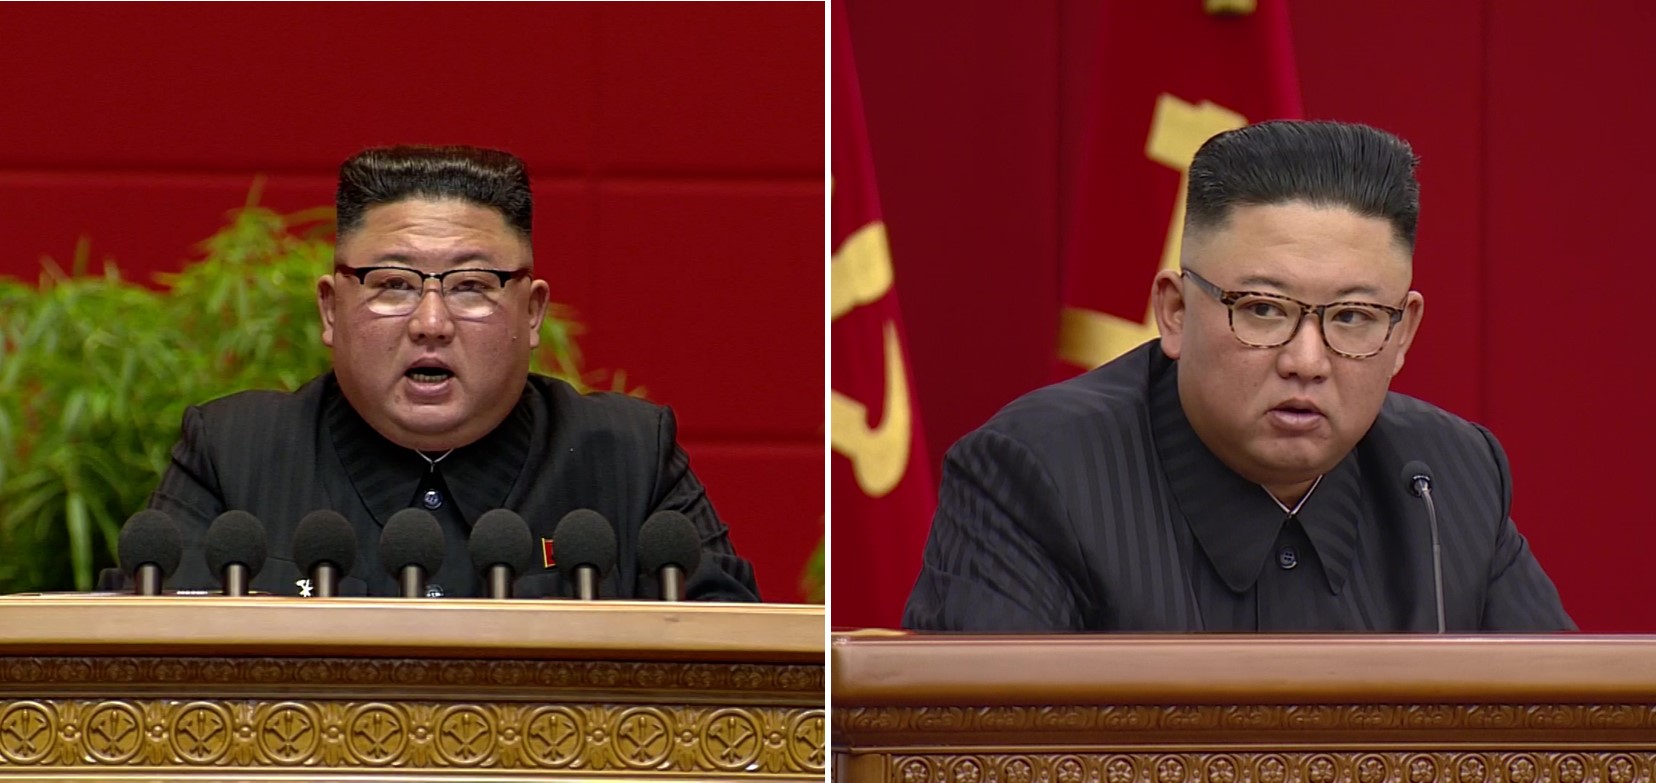 Kim Jong Un S Recent Weight Loss A Medical Assessment 38 North Informed Analysis Of North Korea